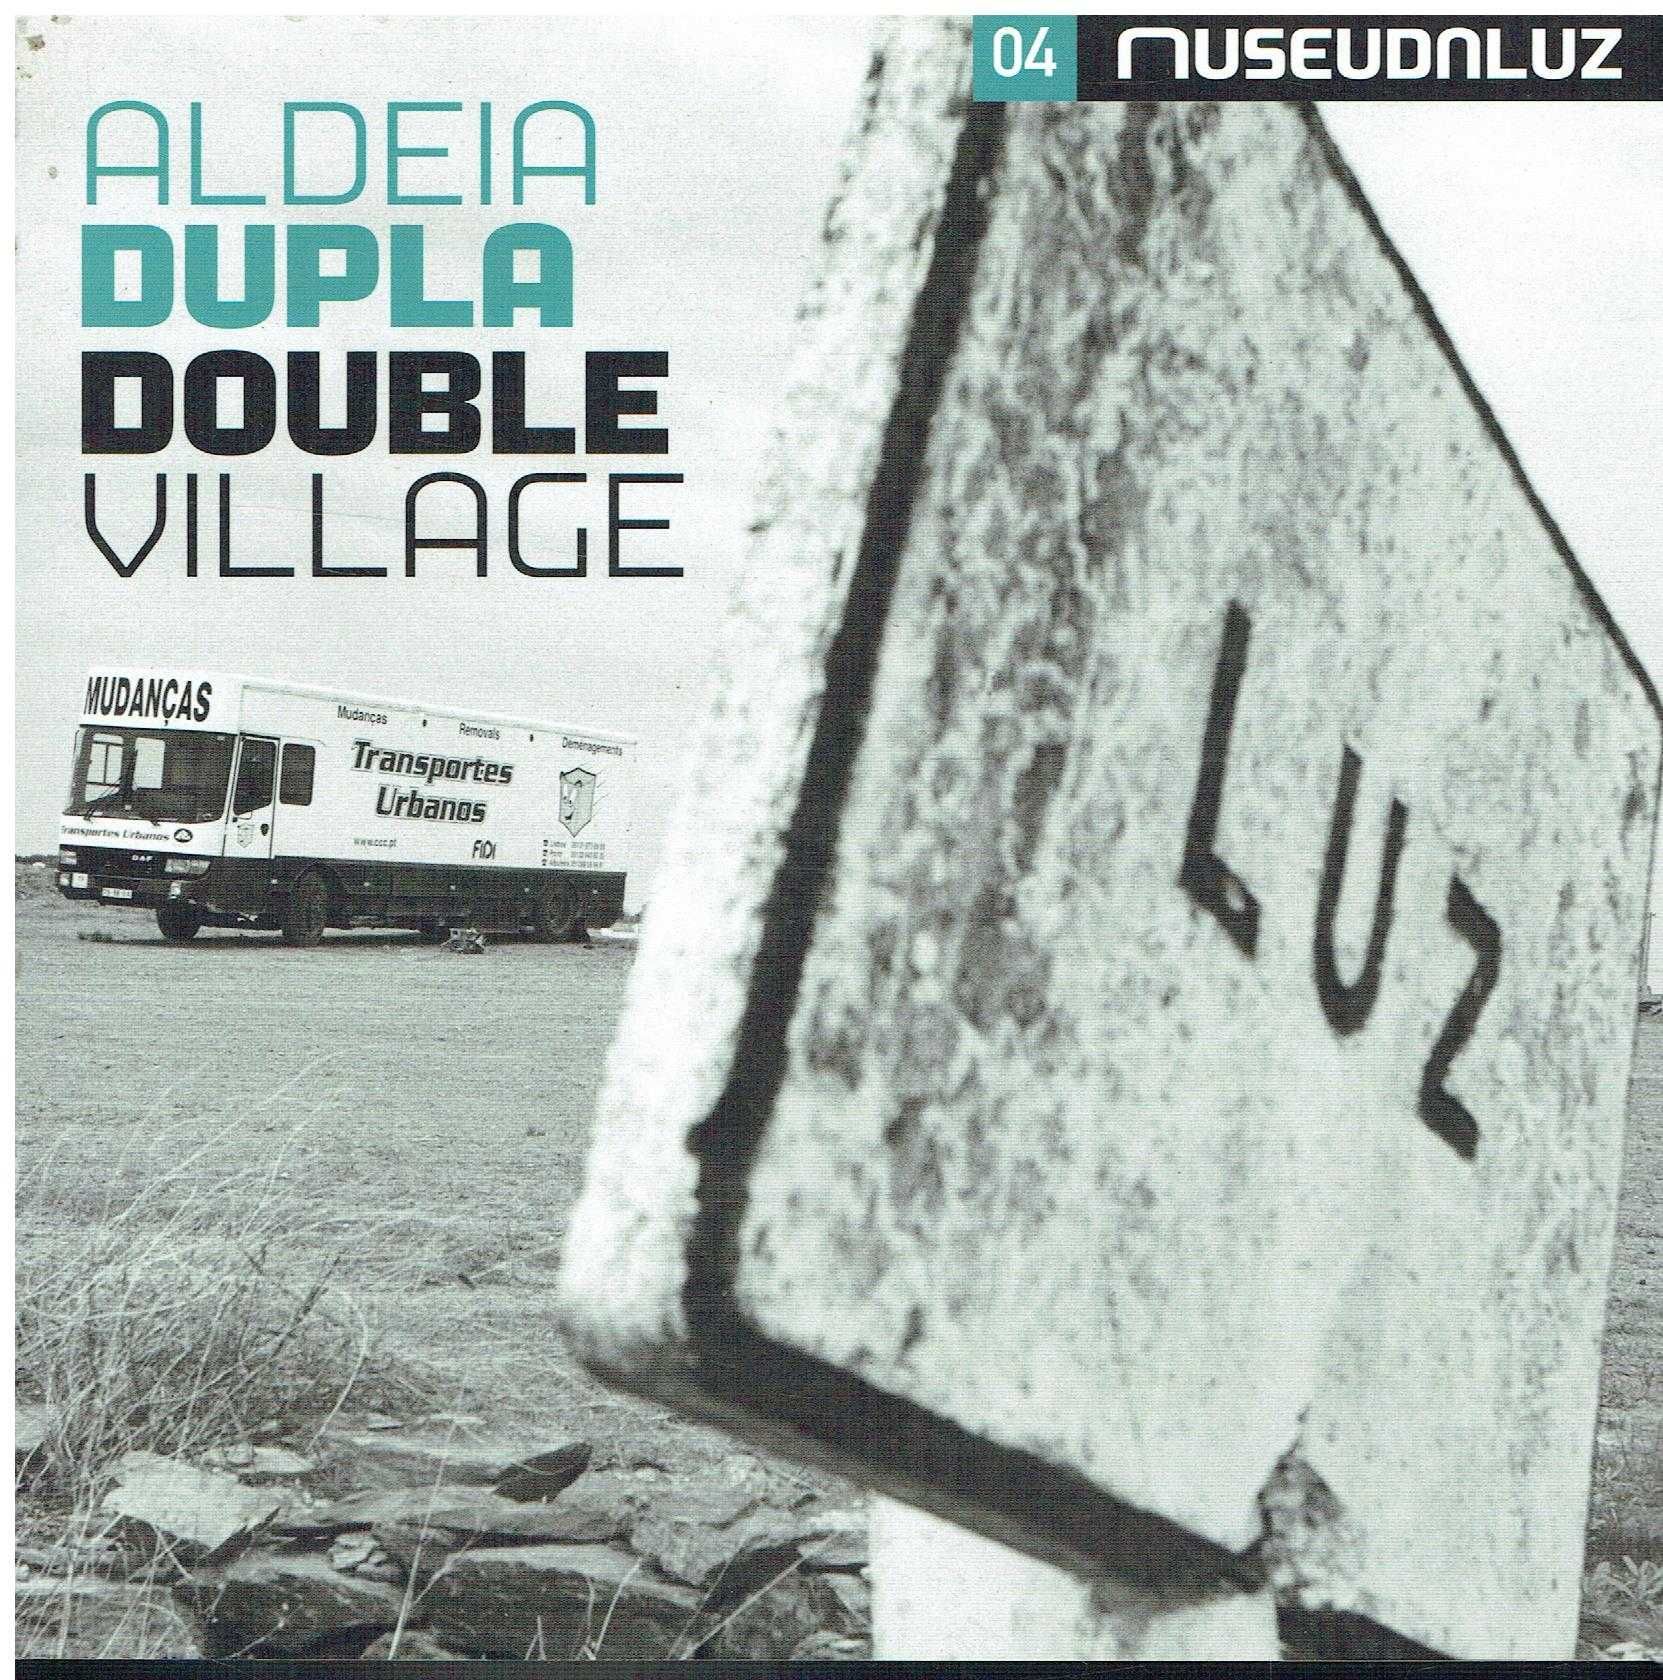 3123

Aldeia dupla = Double village  (Museu da Luz)